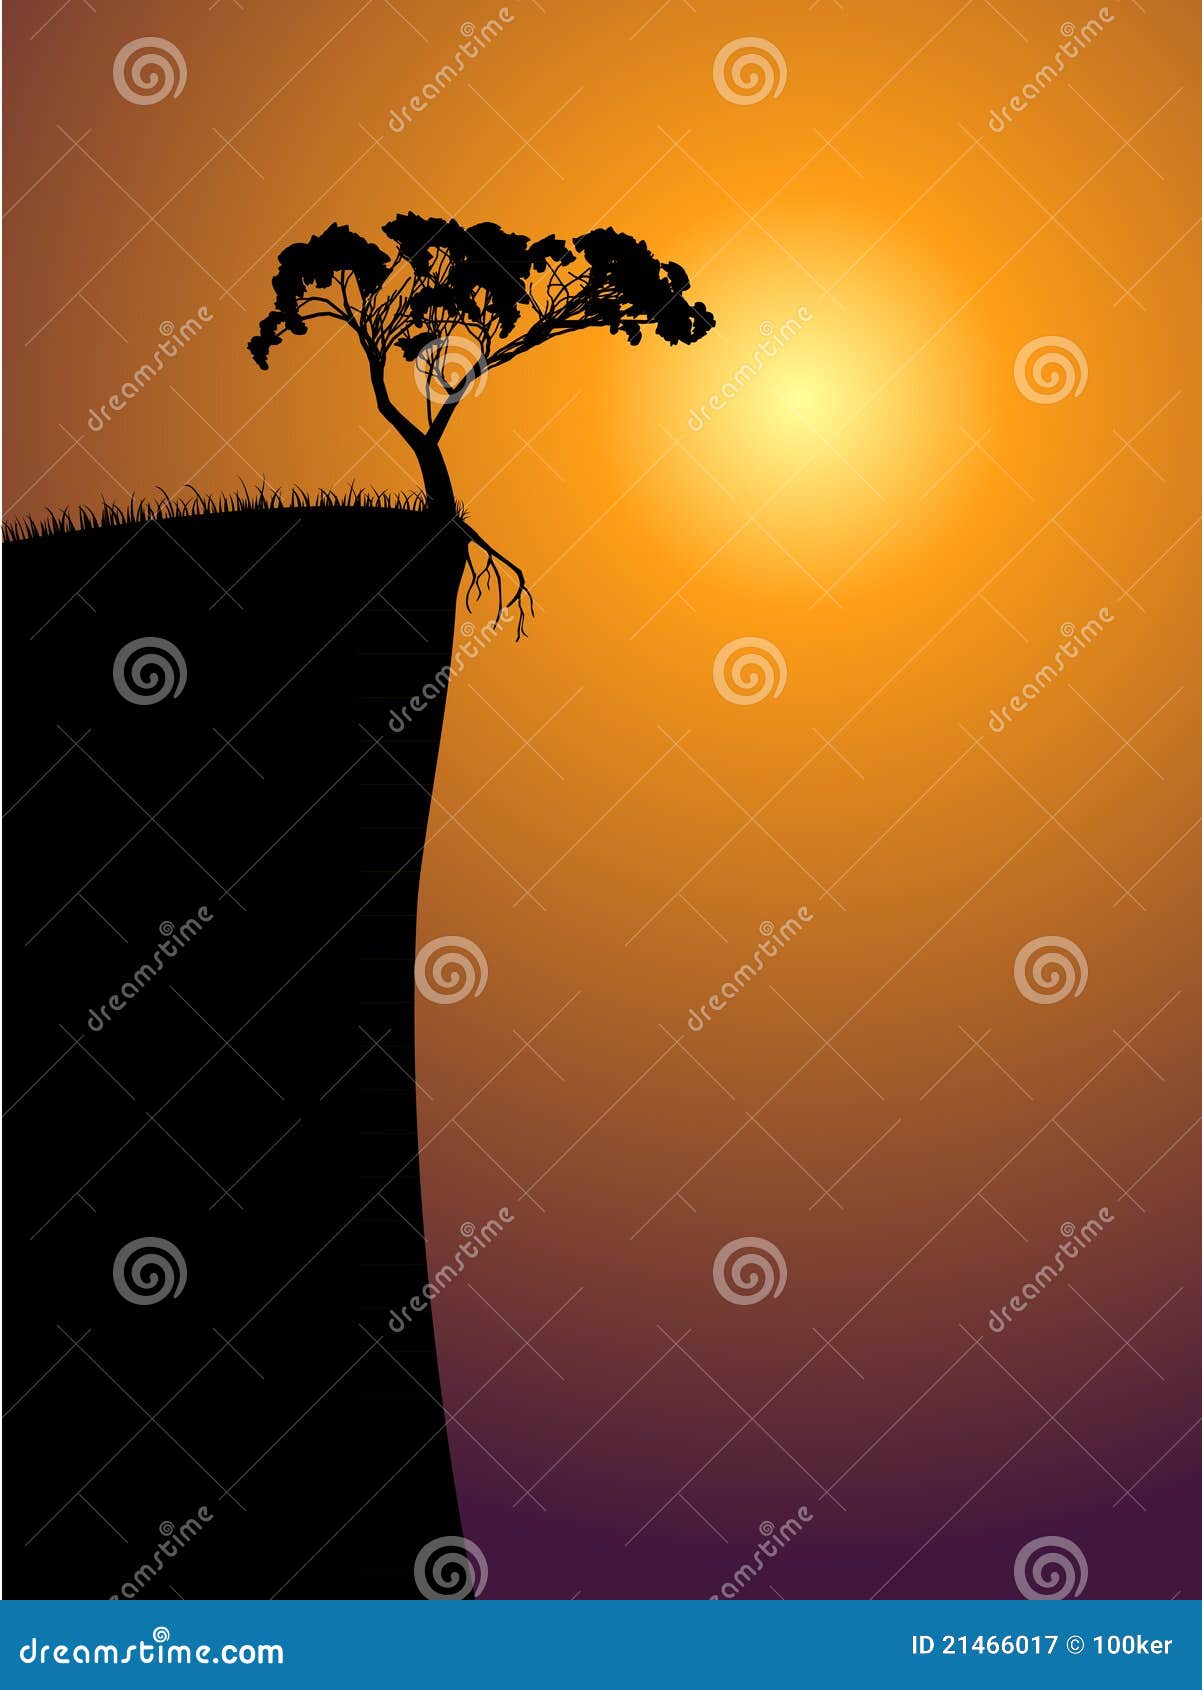 single lonely tree on a precipice